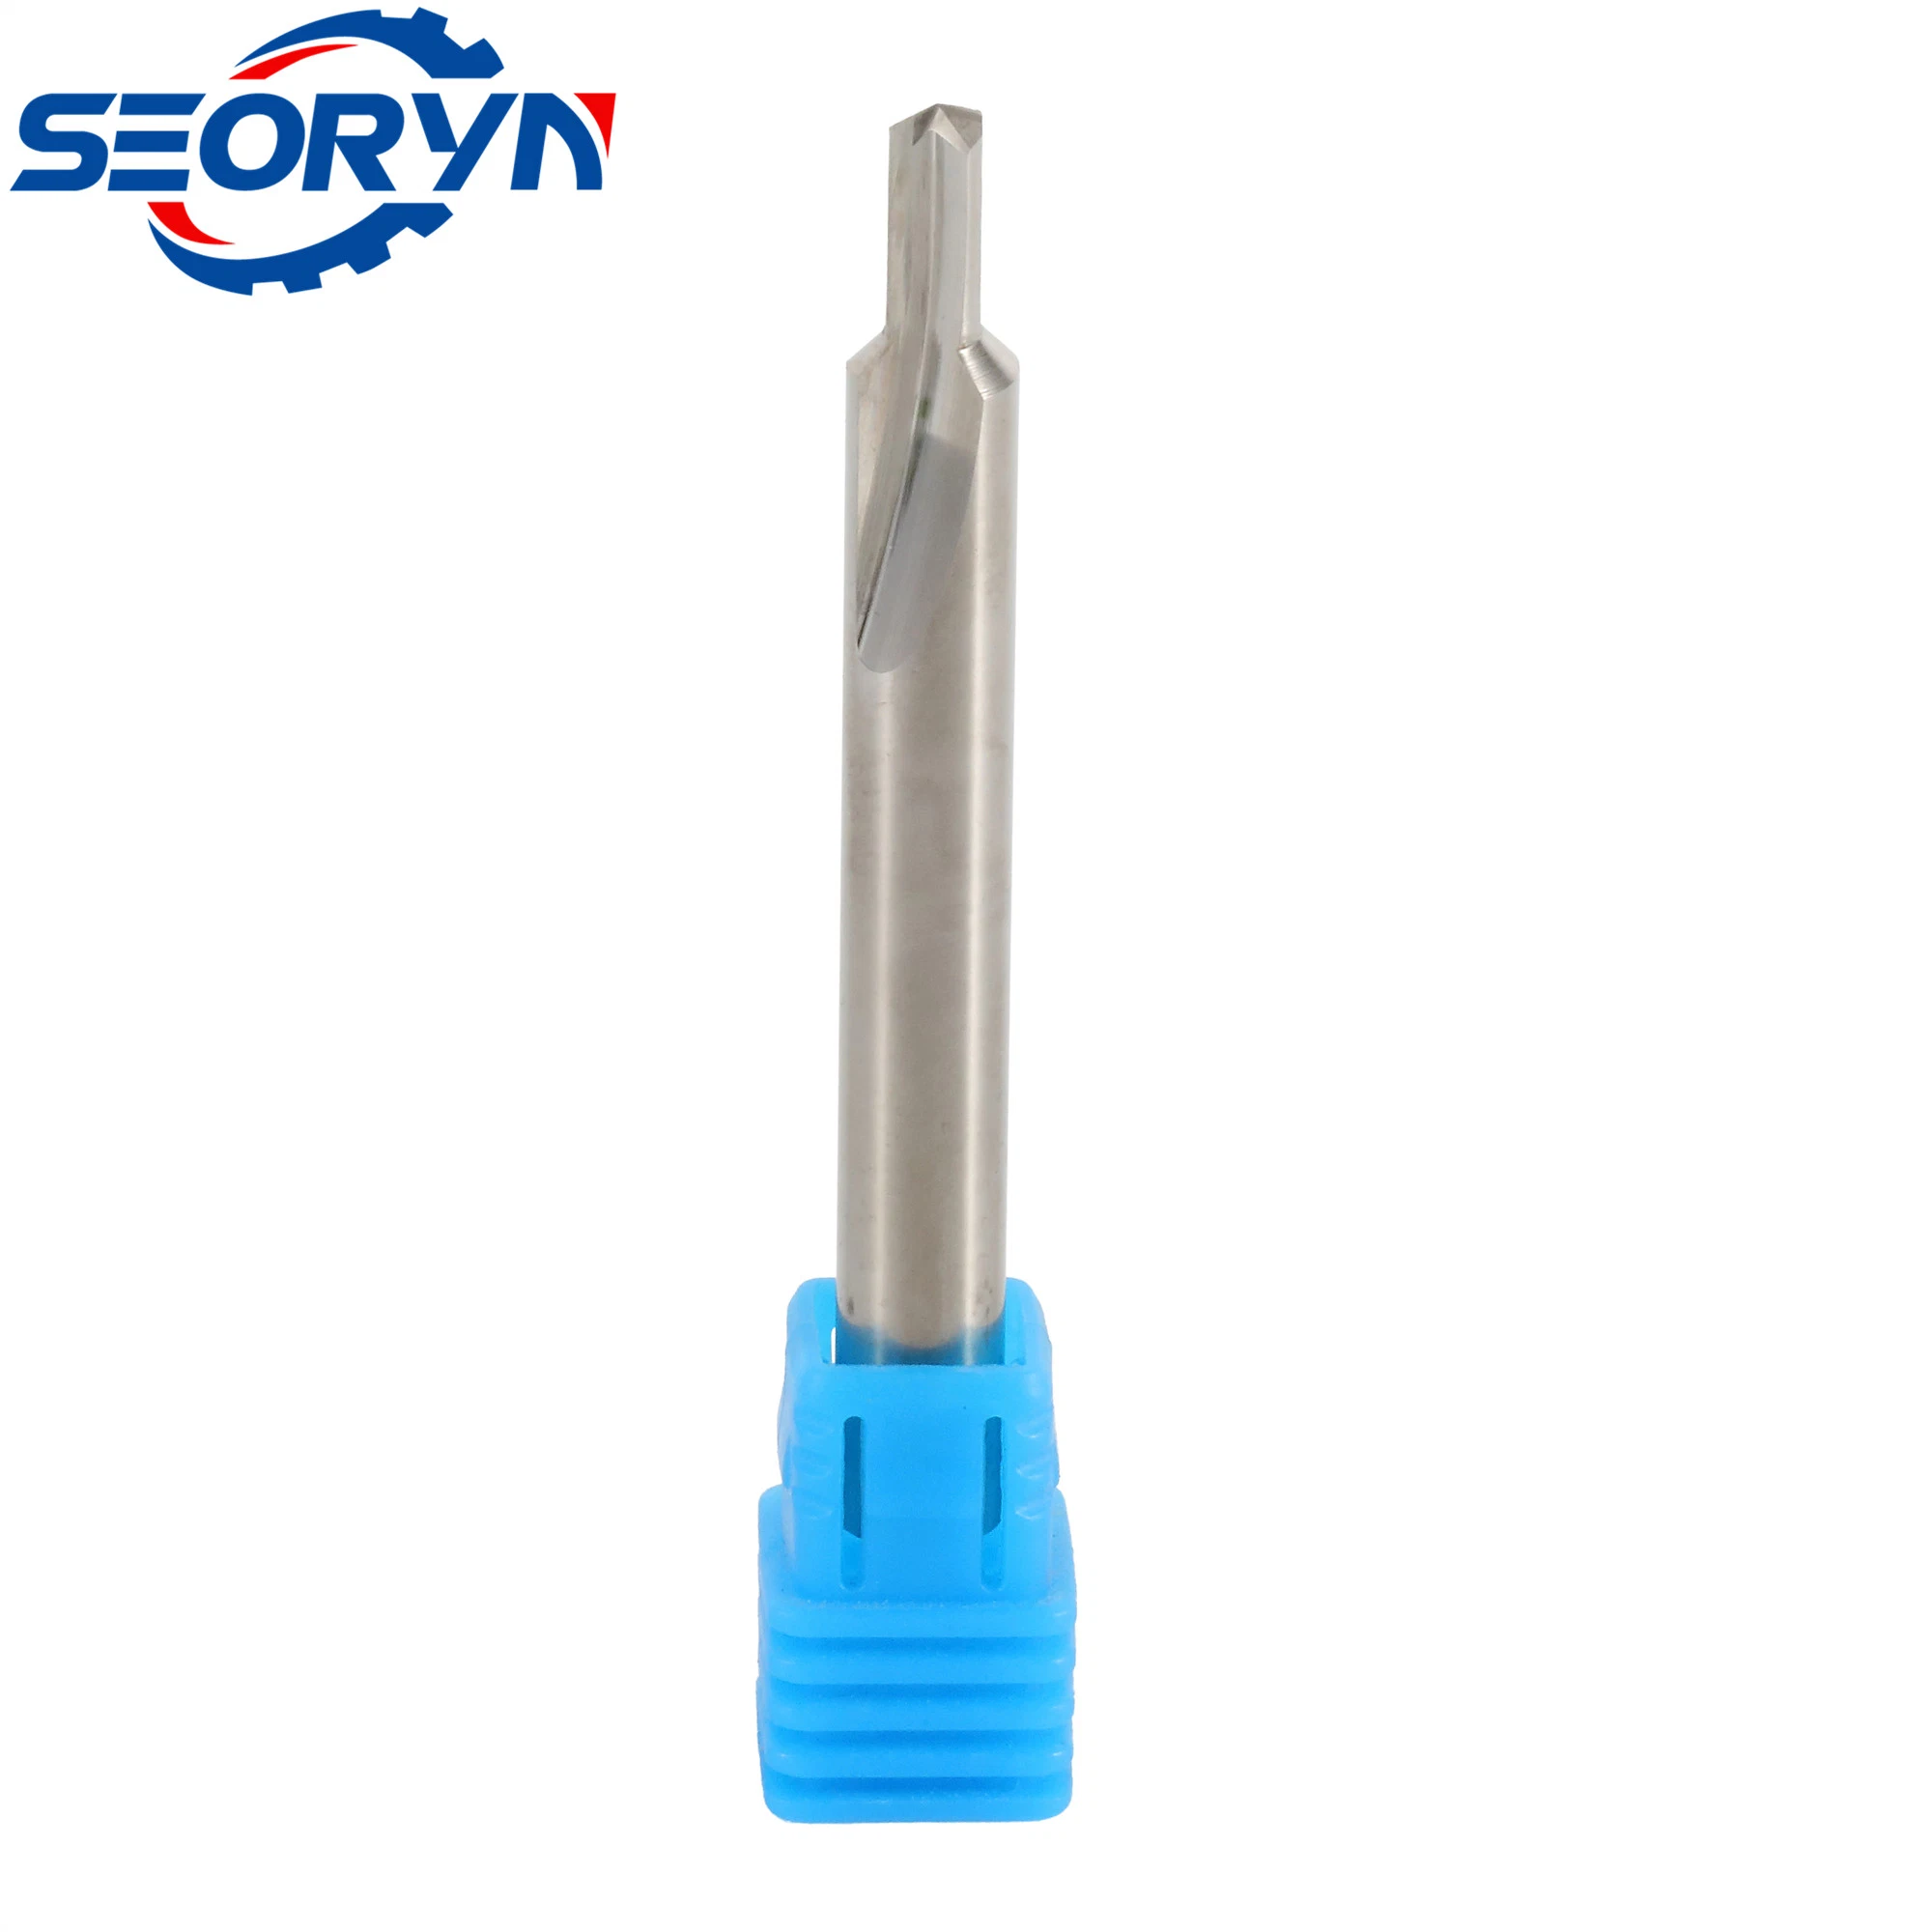 Senyo Customized Solid Carbide Step Drill Bit